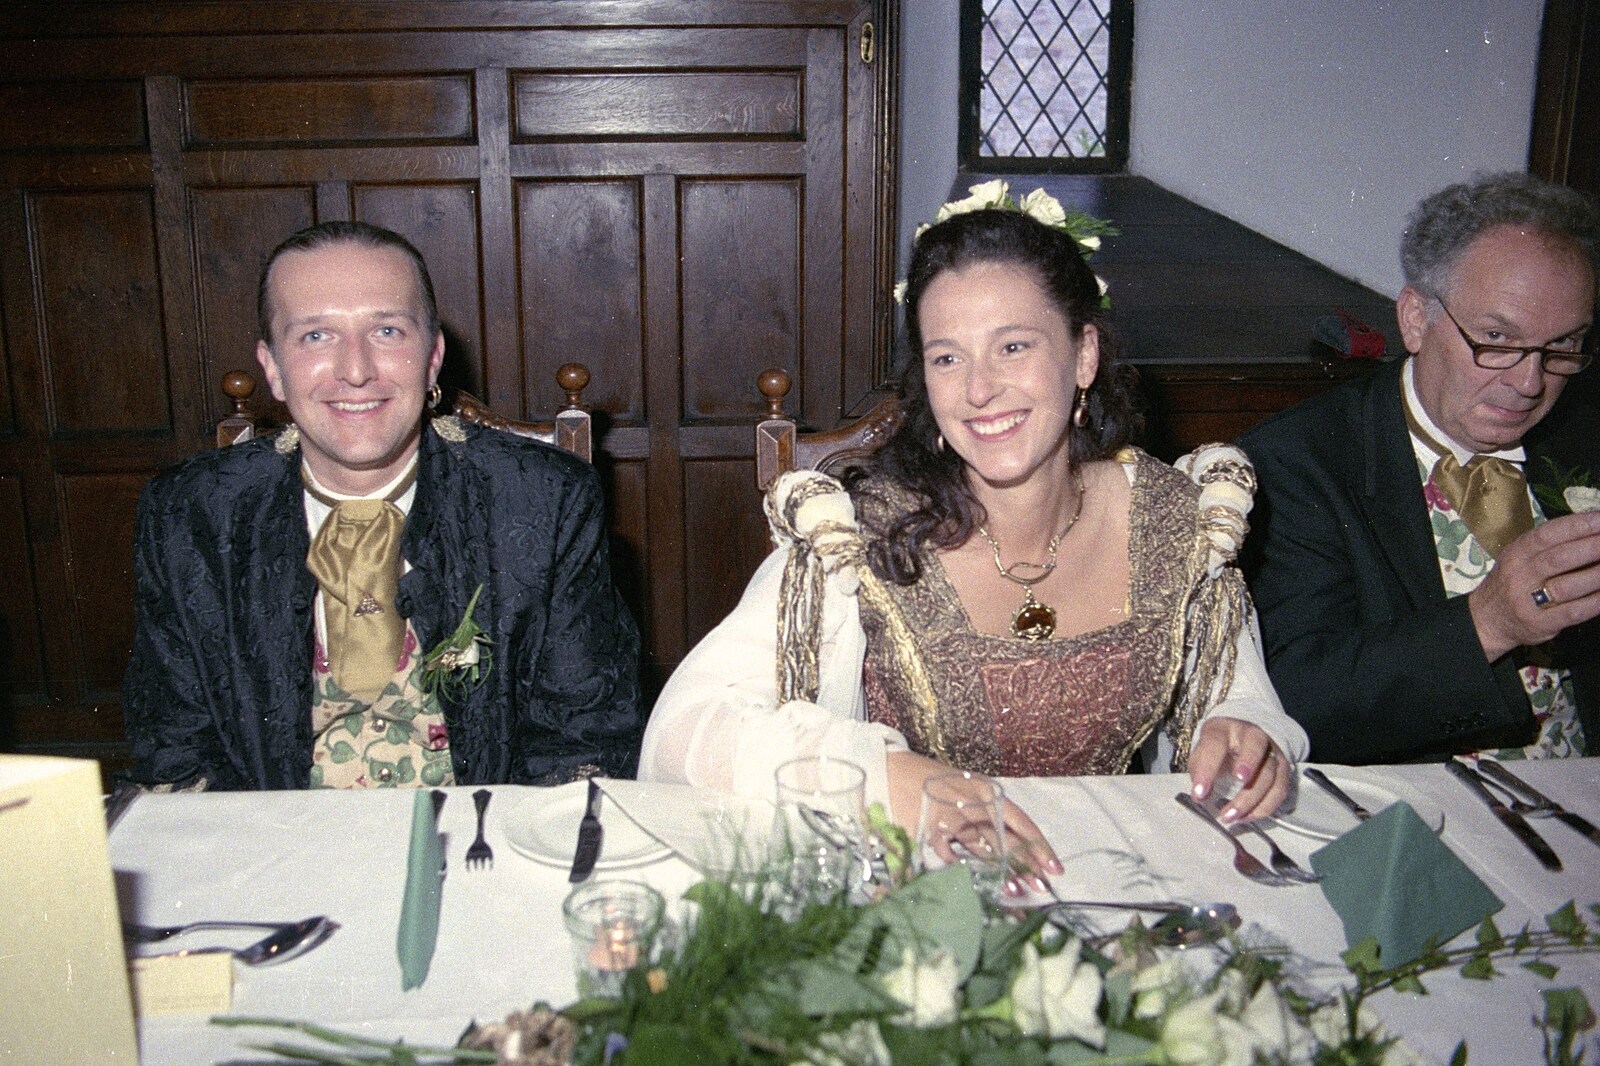 Stuart and Sarah's CISU Wedding, Naworth Castle, Brampton, Cumbria - 21st September 1996: Stuart and Sarah